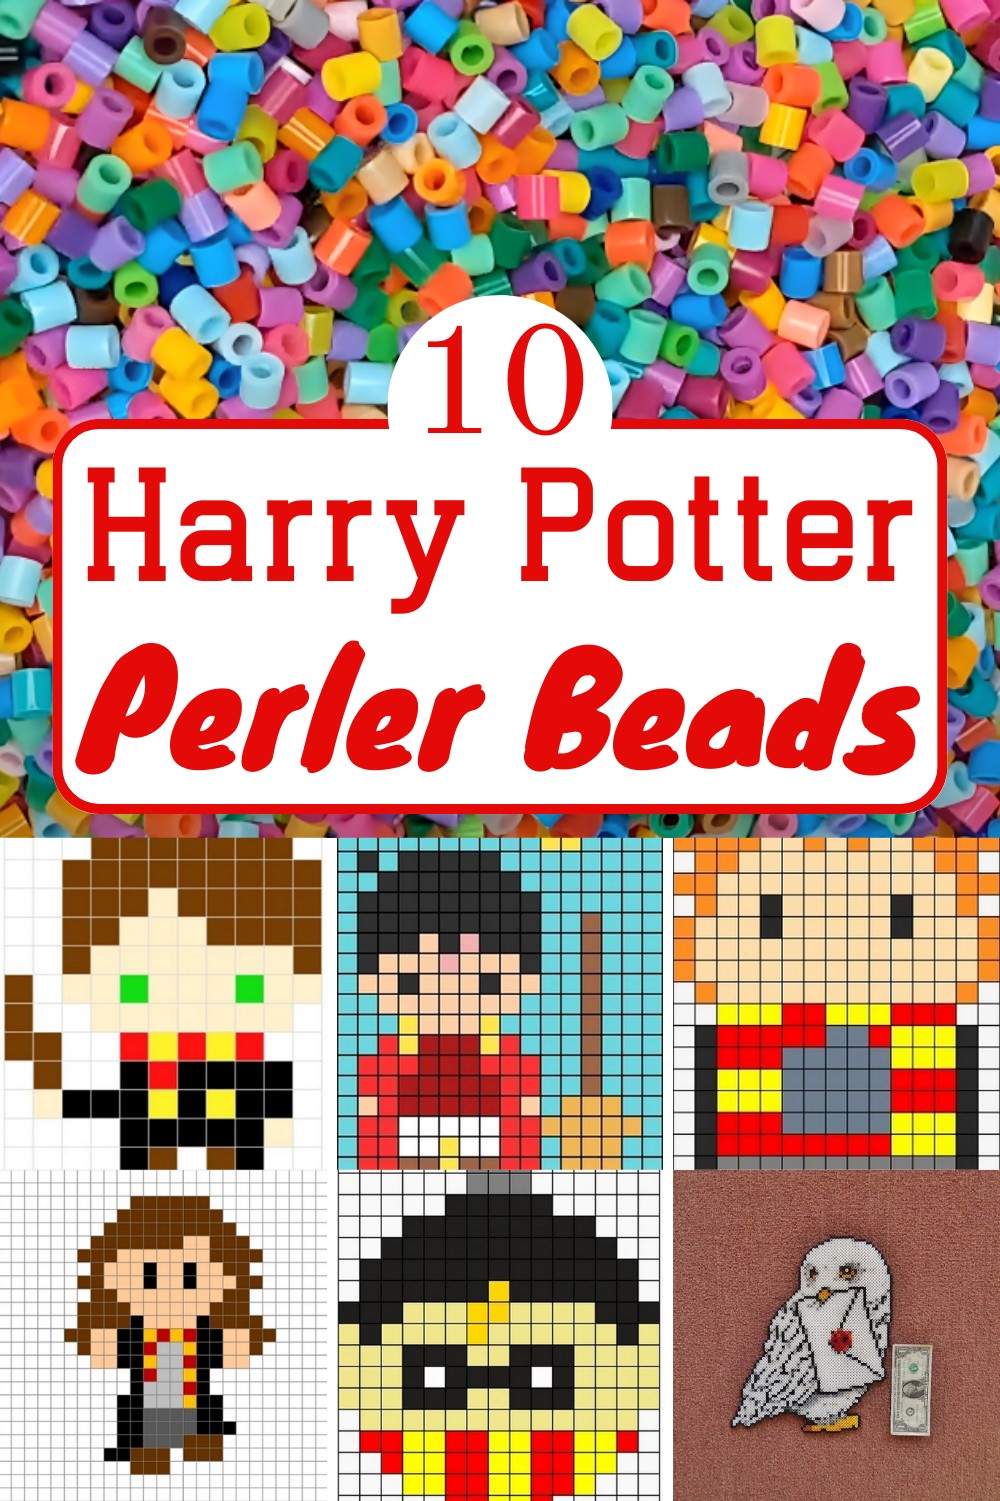 10 Harry Potter Perler Beads Patterns - DIY Crafts